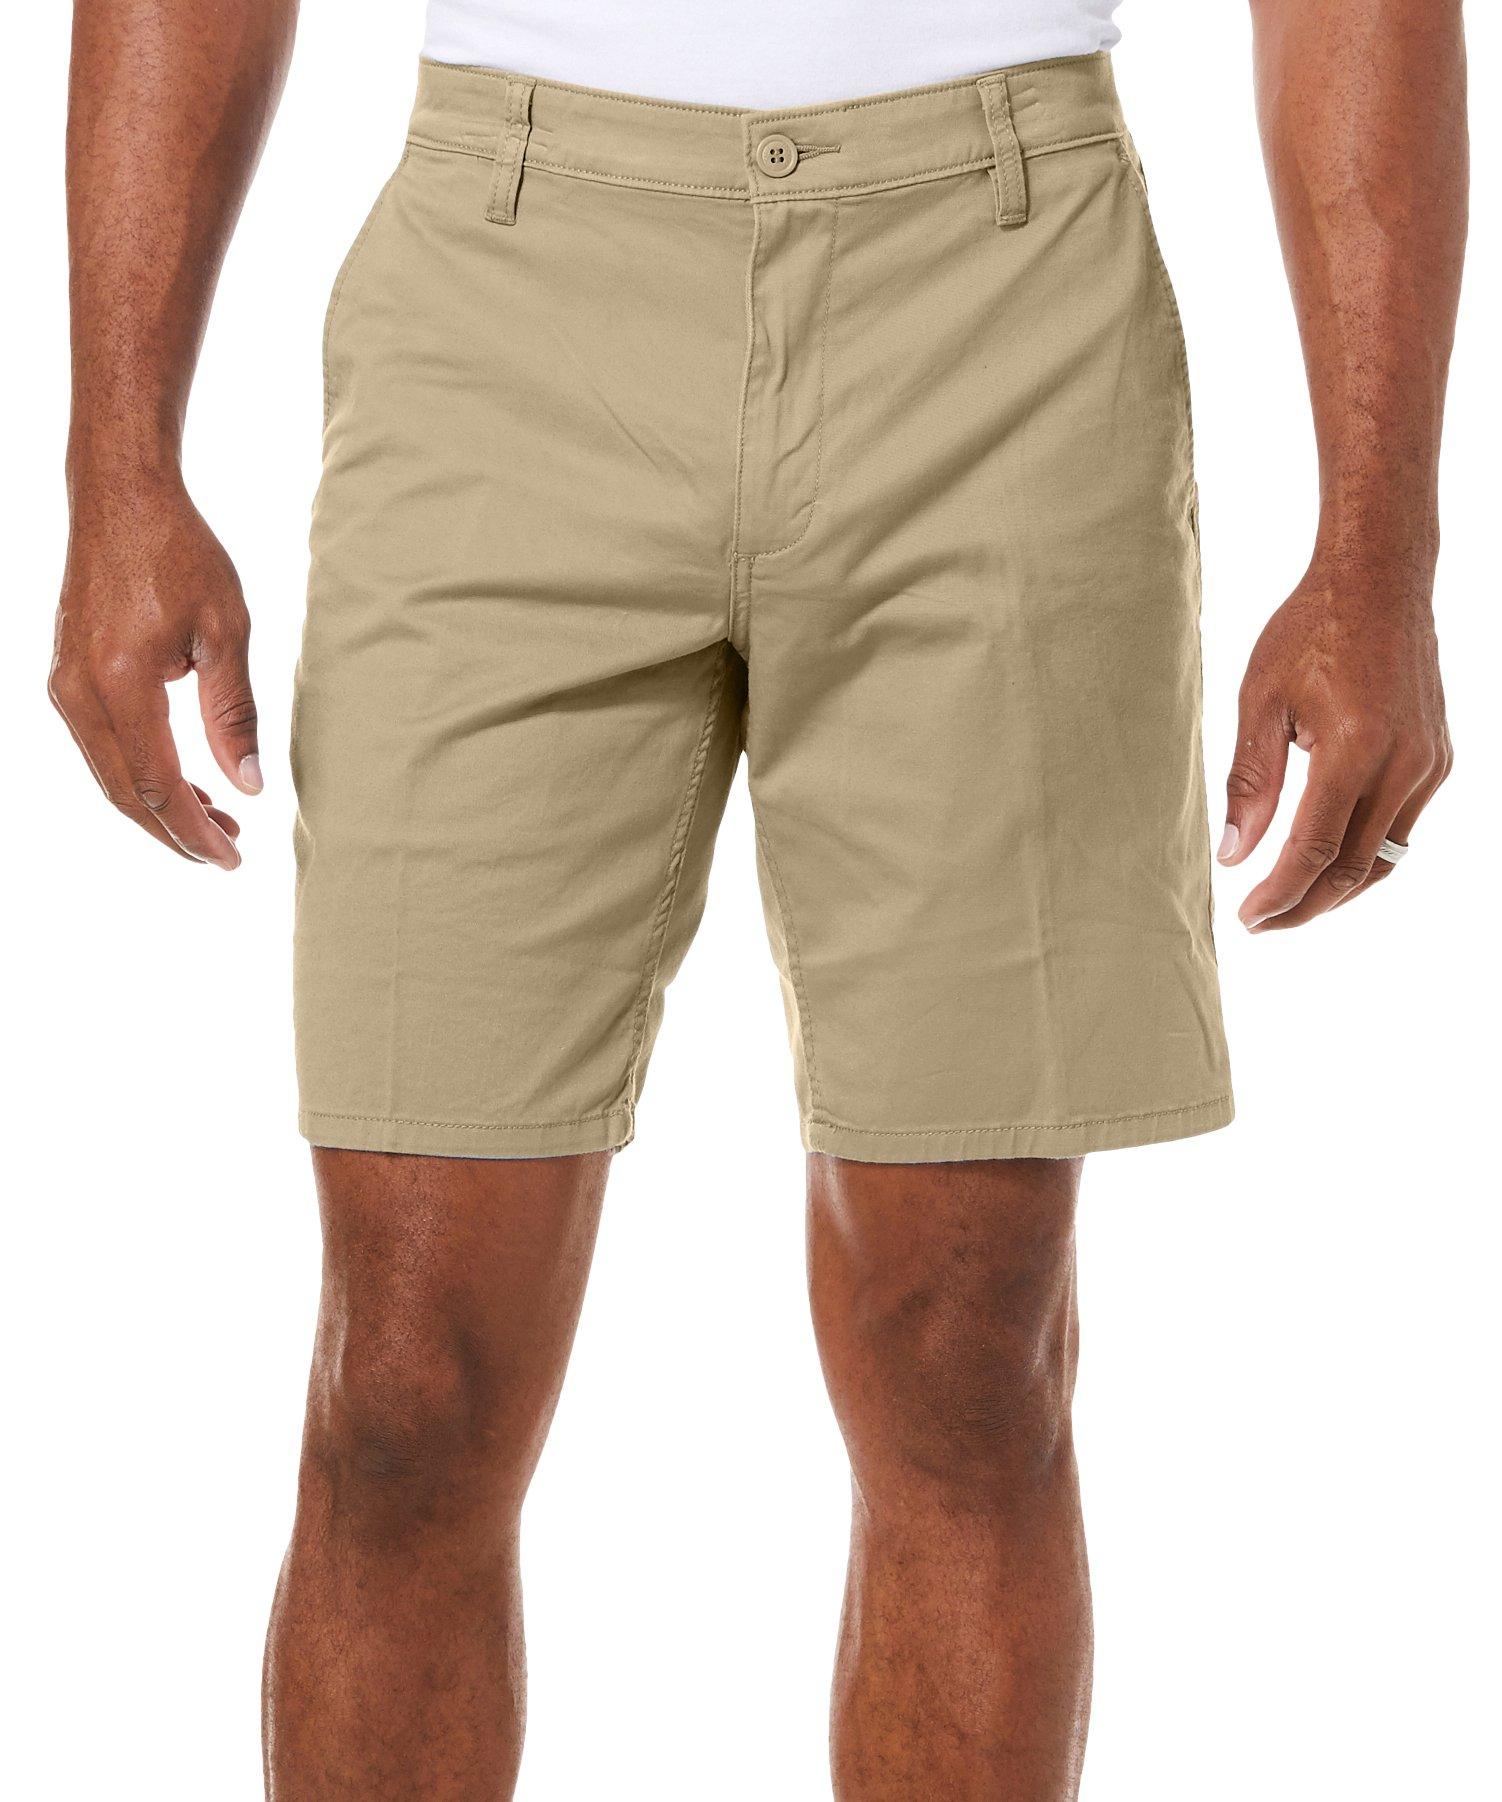 Men's Shorts | Cargo, Running, Pleated Shorts for Men | Bealls Florida